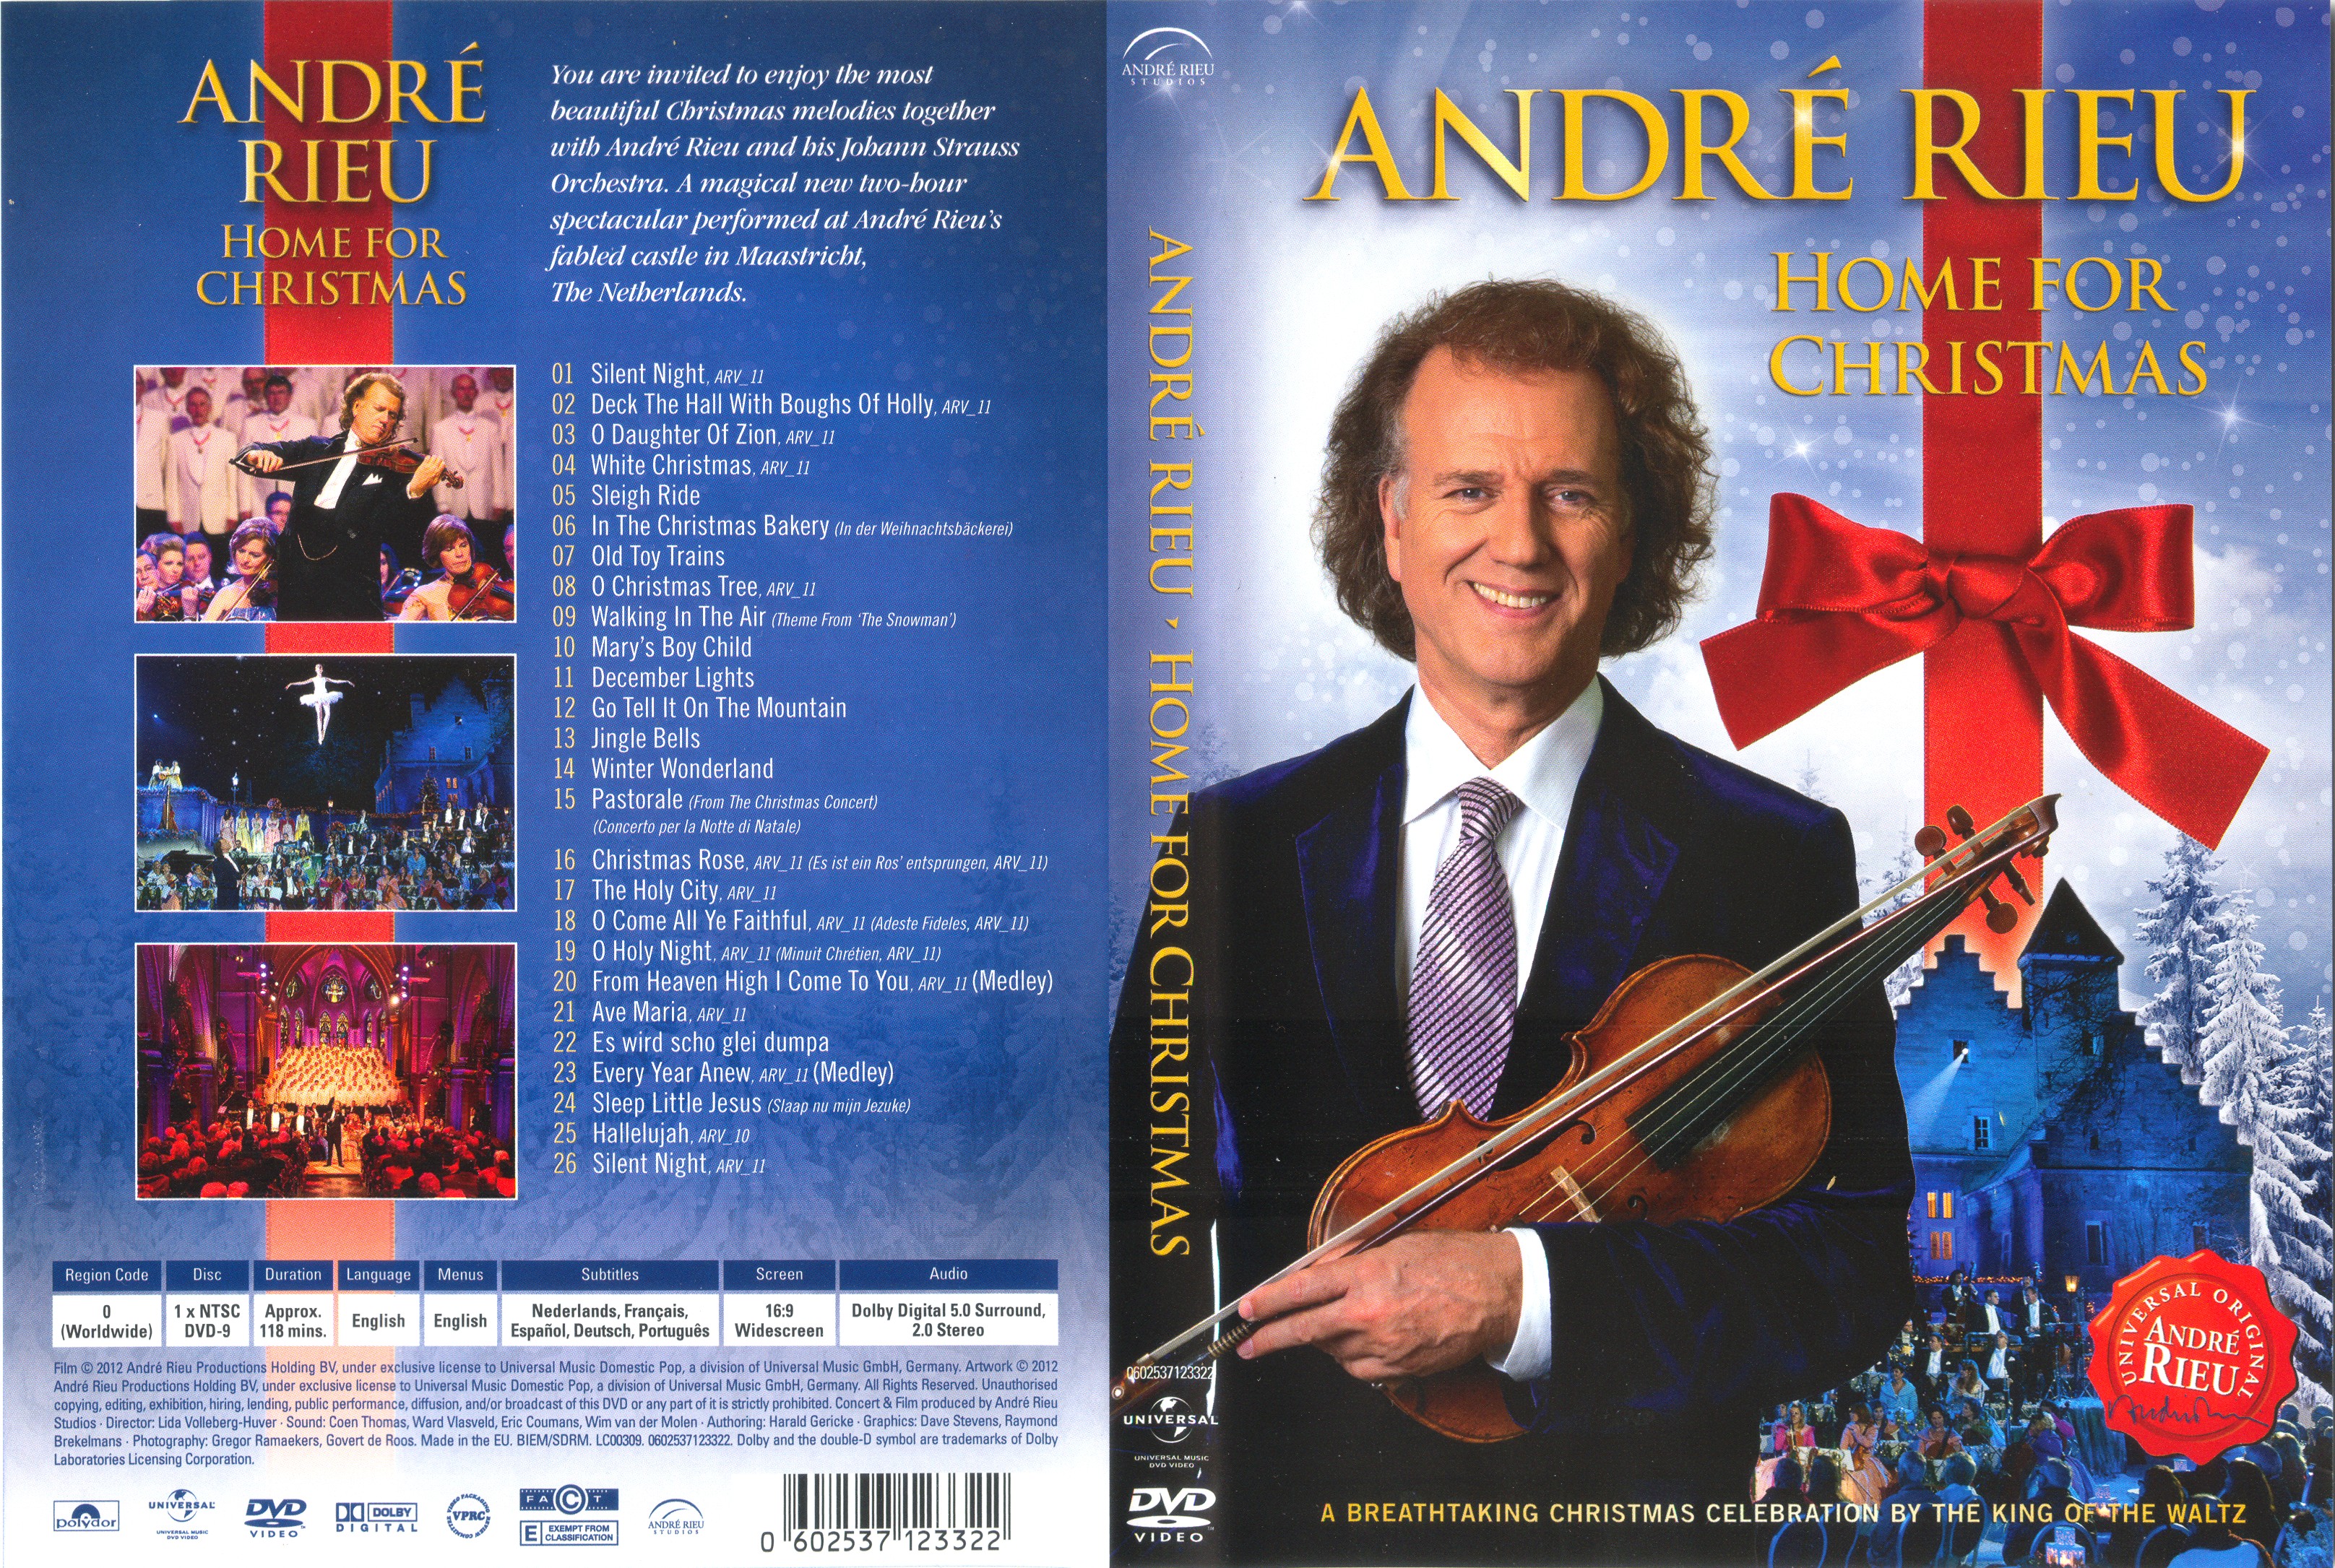 Jaquette DVD Andr Rieu Home for Christmas